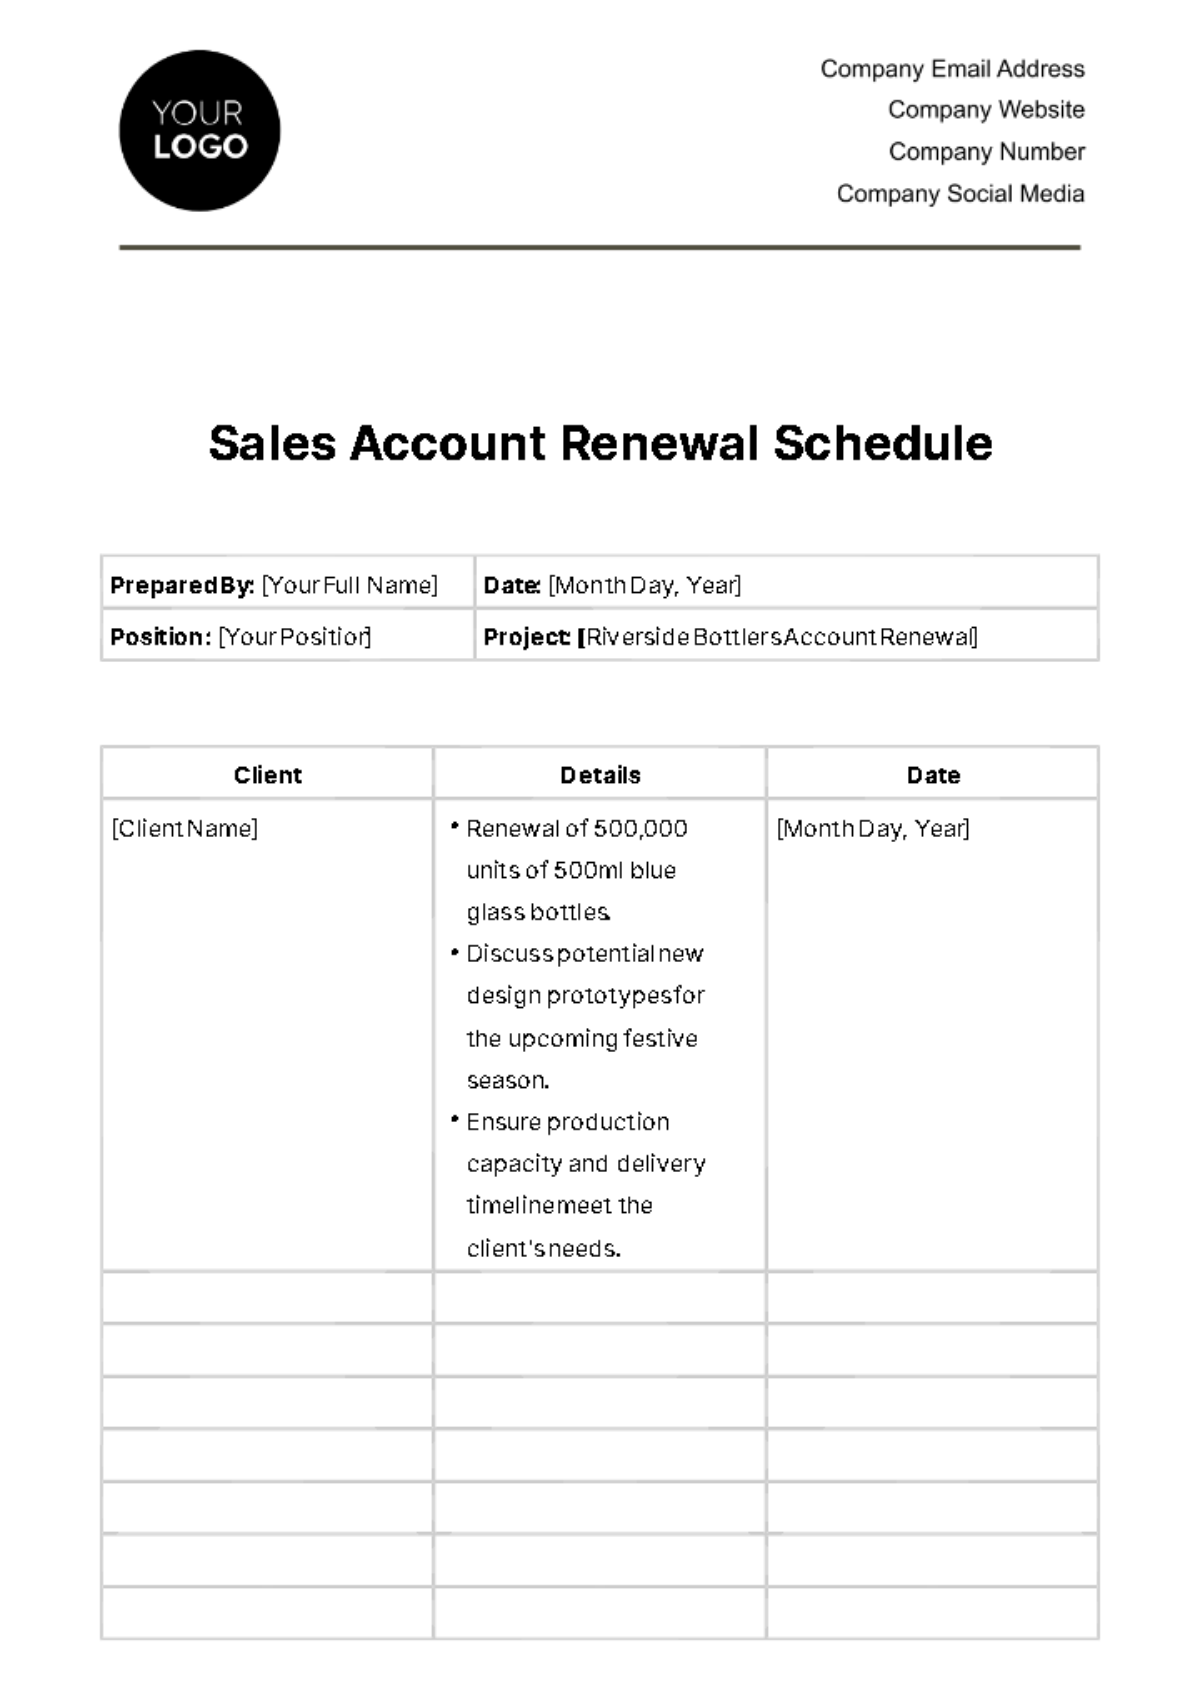 Sales Account Renewal Schedule Template